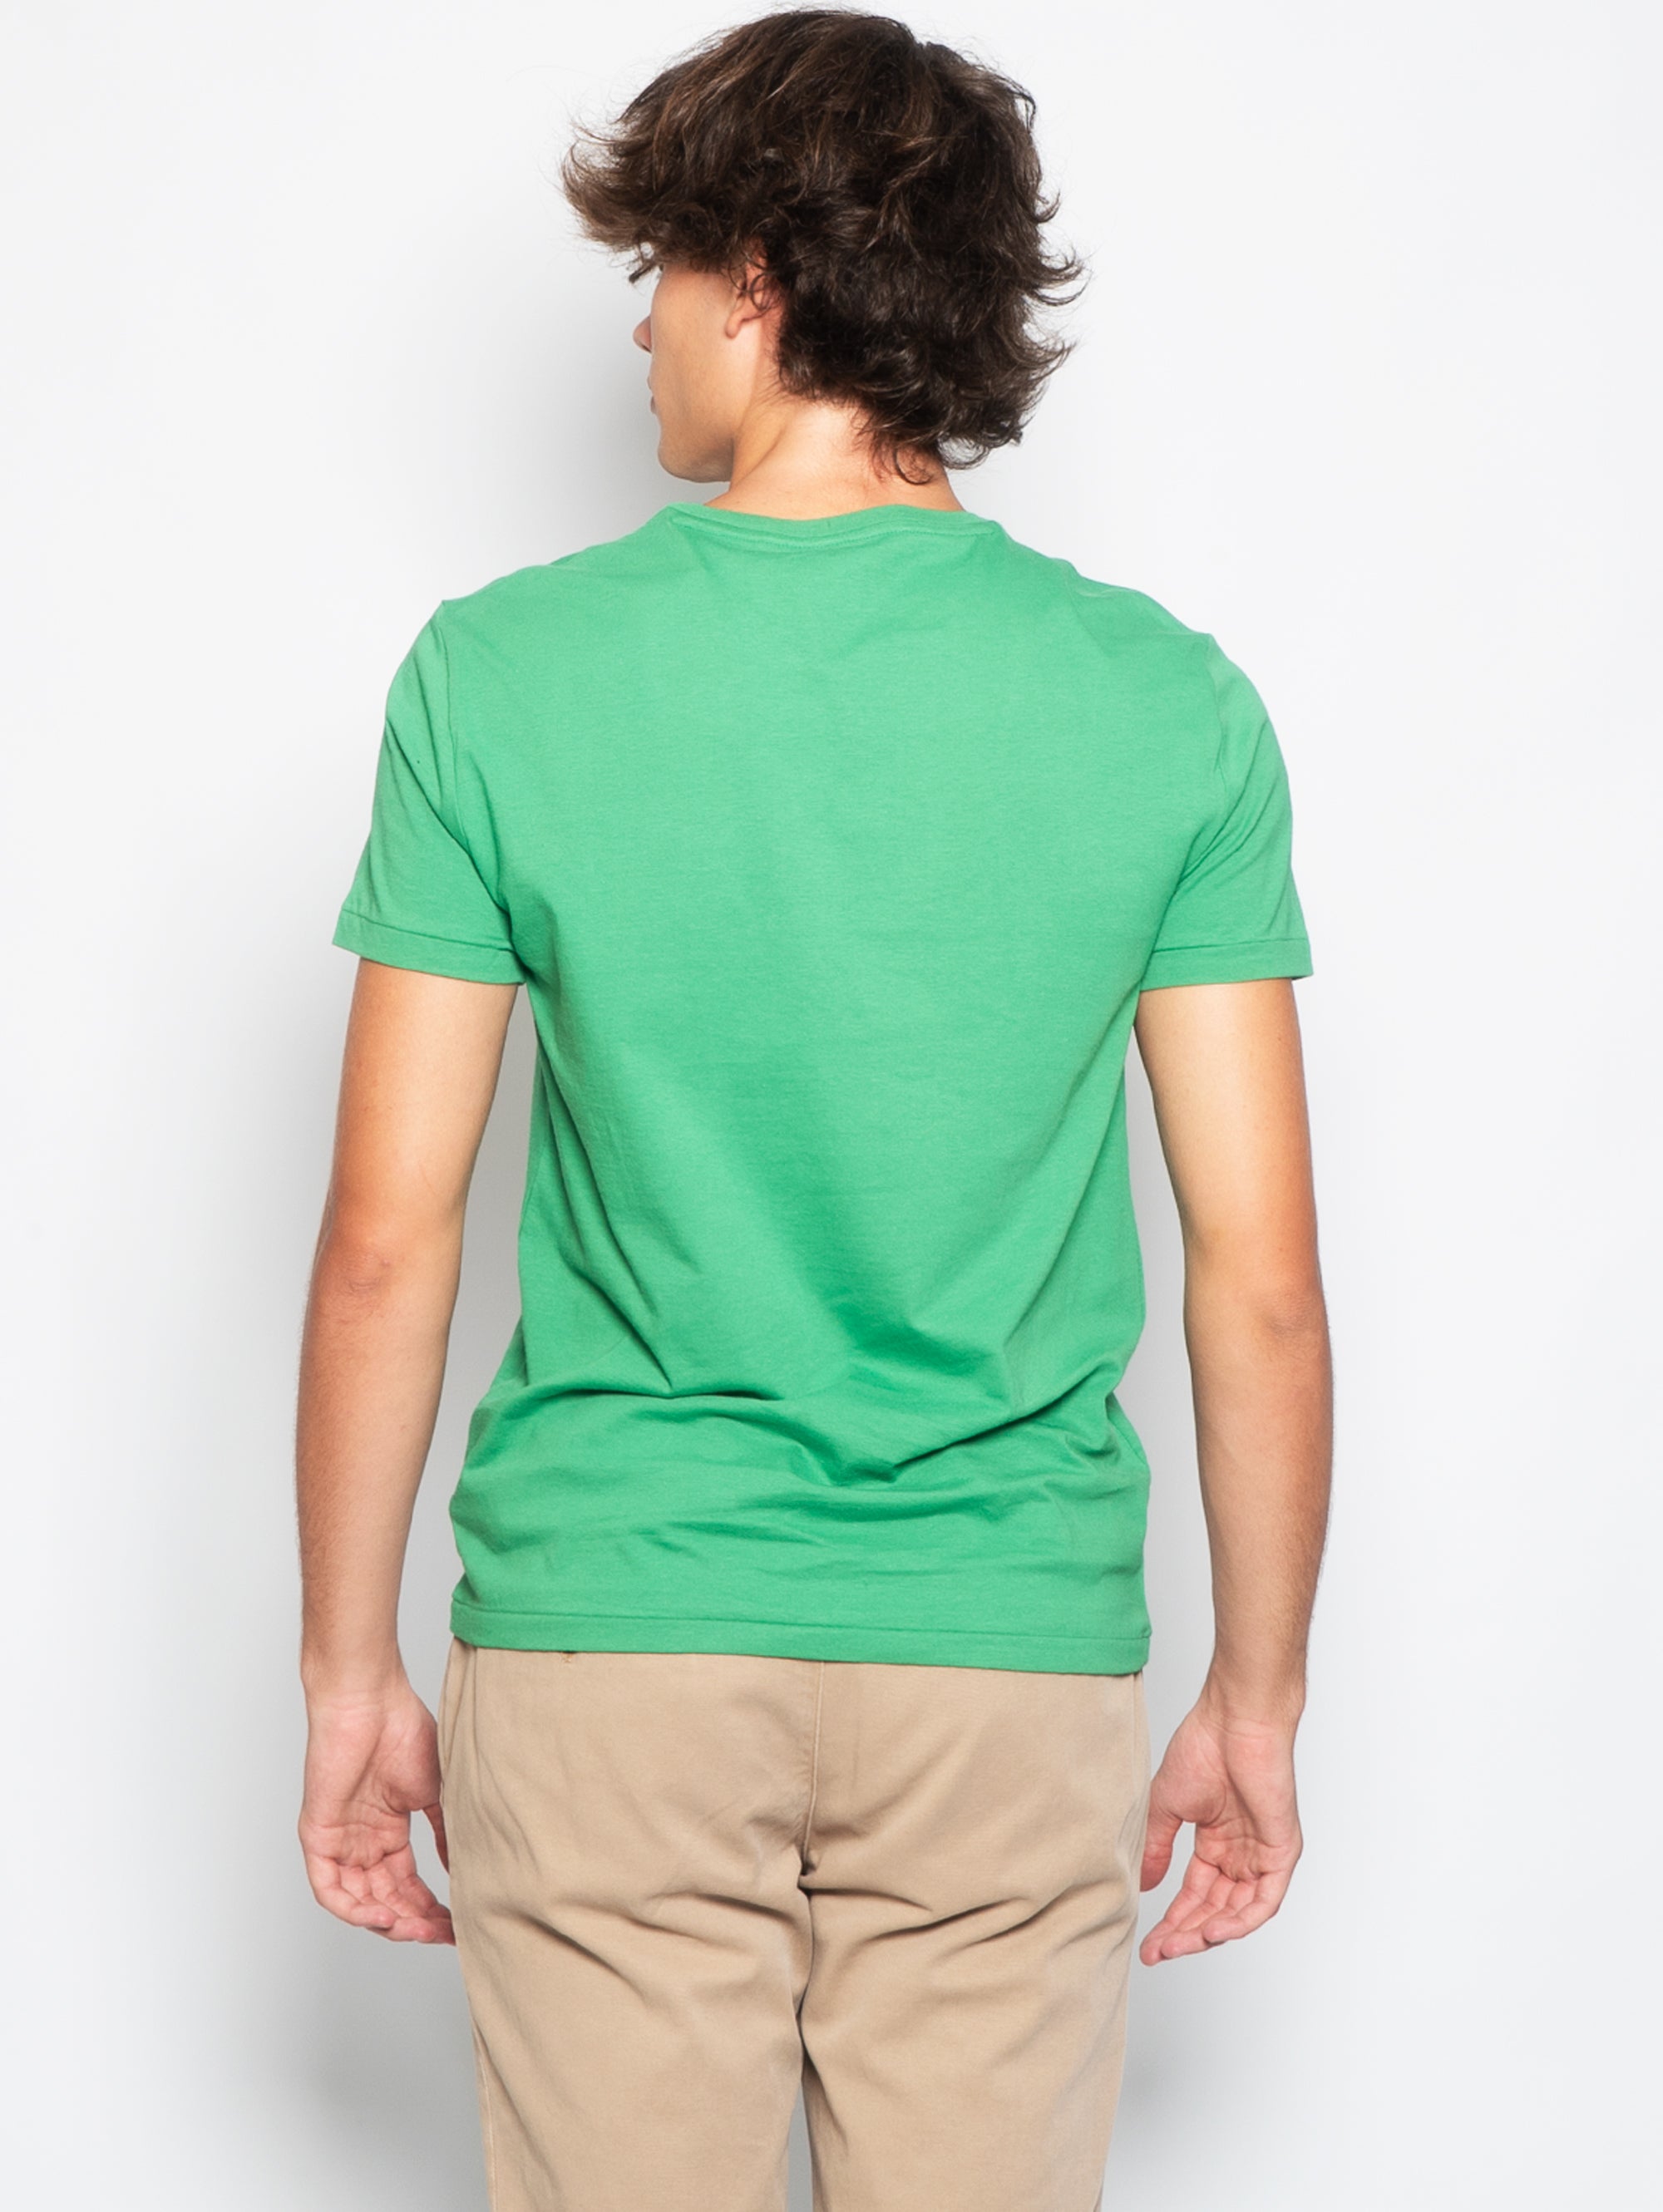 Grünes Rundhals-T-Shirt